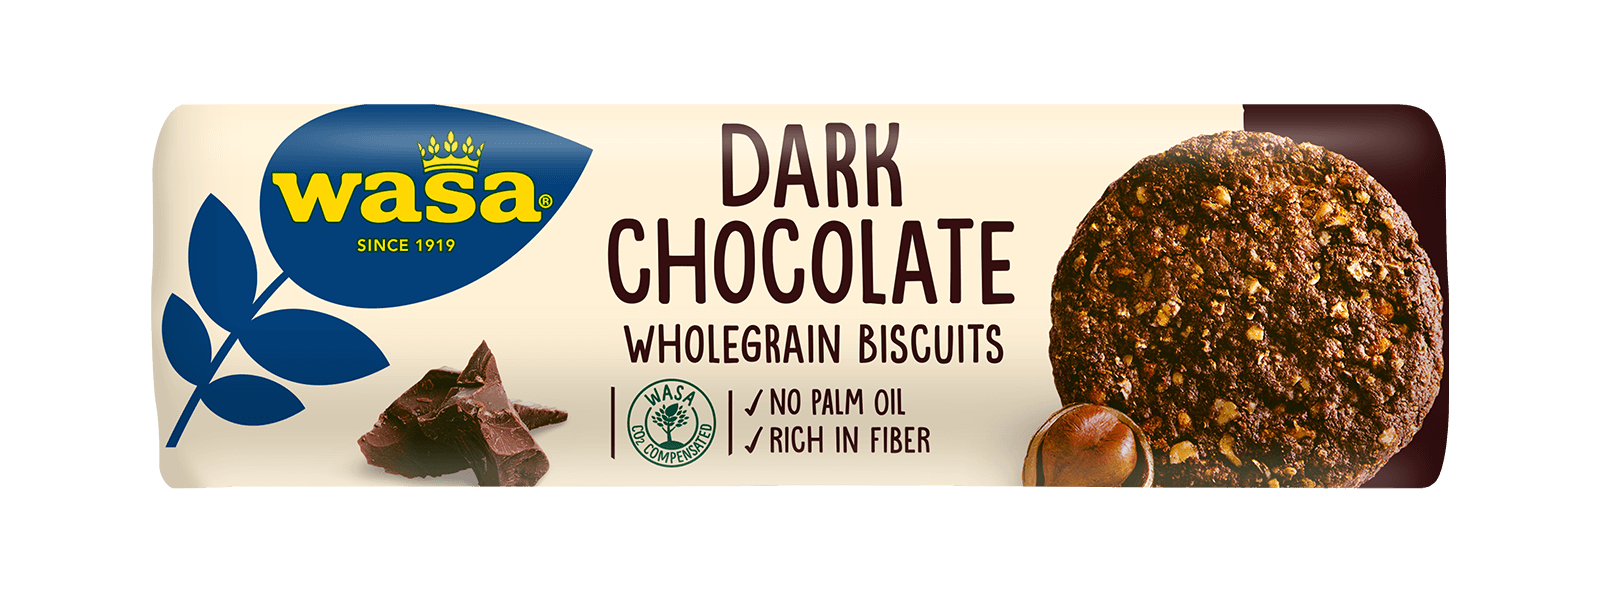 Dark Chocolate - Sprøde chokoladekiks fibre |